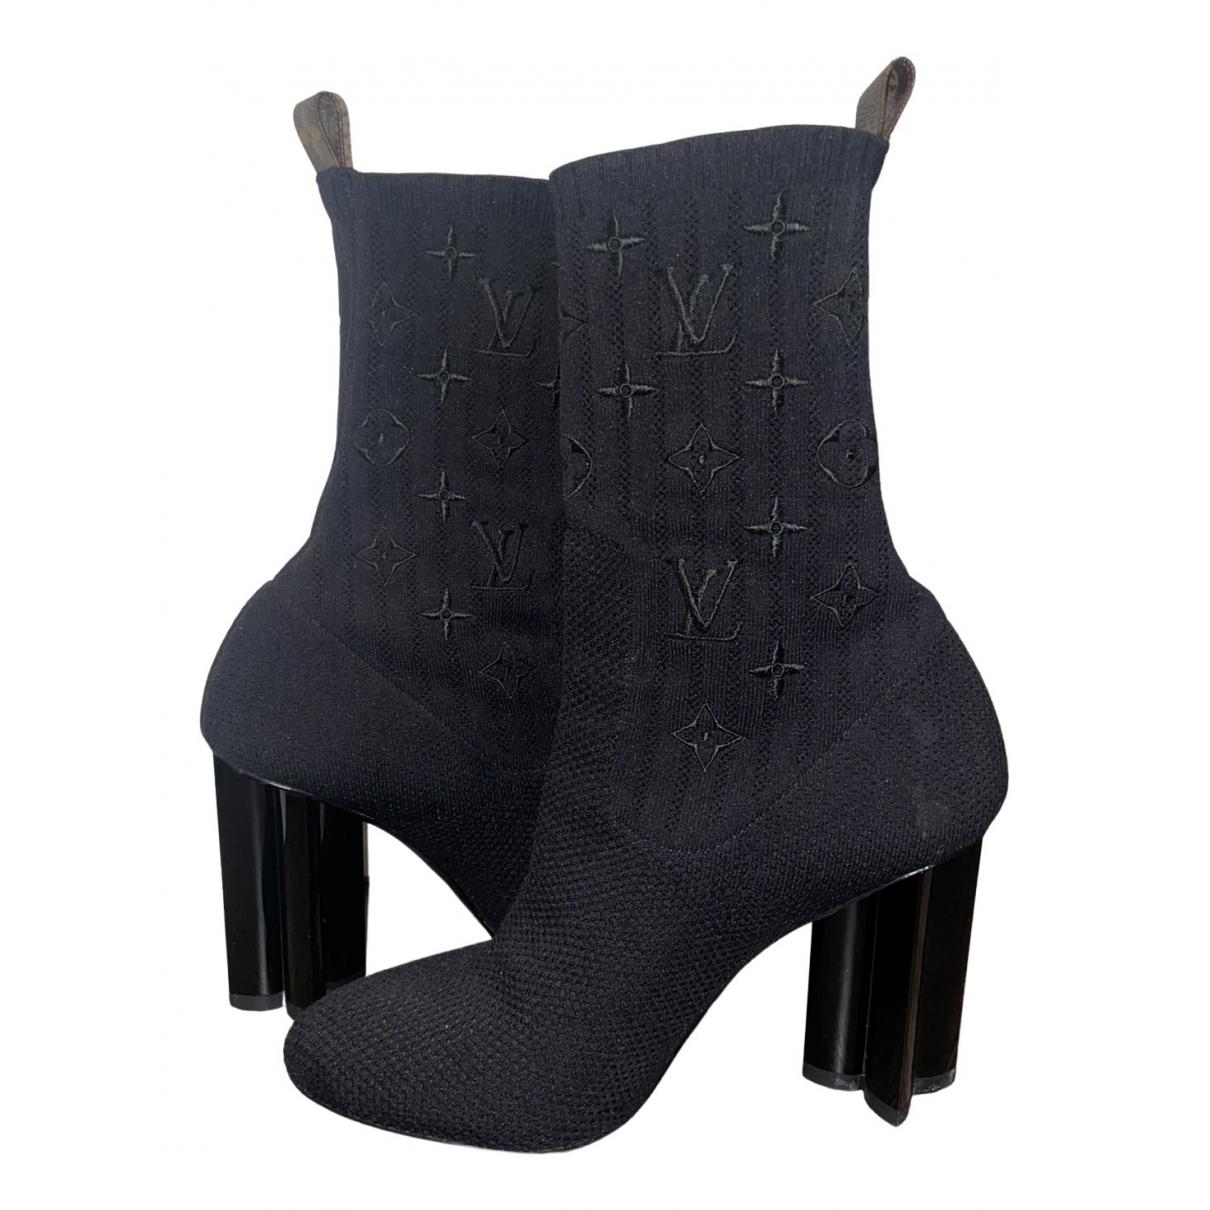 Silhouette cloth ankle boots Louis Vuitton Black size 38 EU in